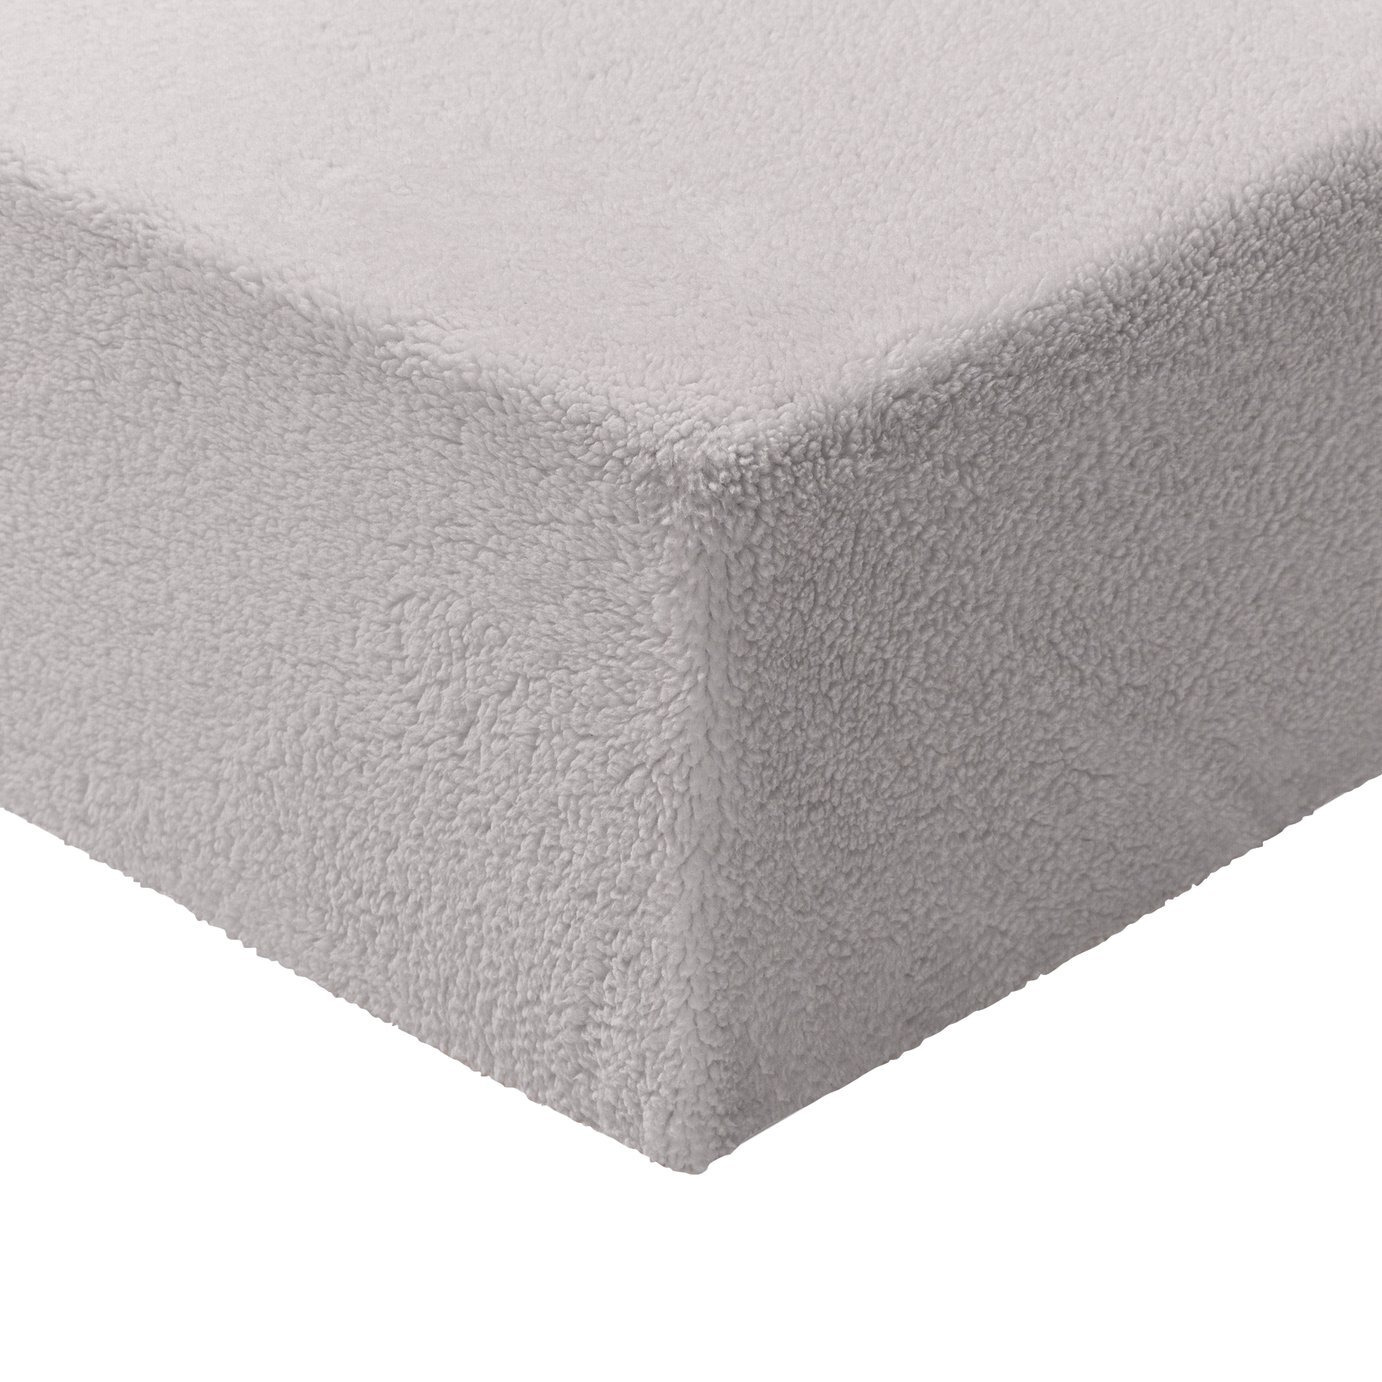 Argos Home Fleece Grey Fitted Sheet - Superking - image 1